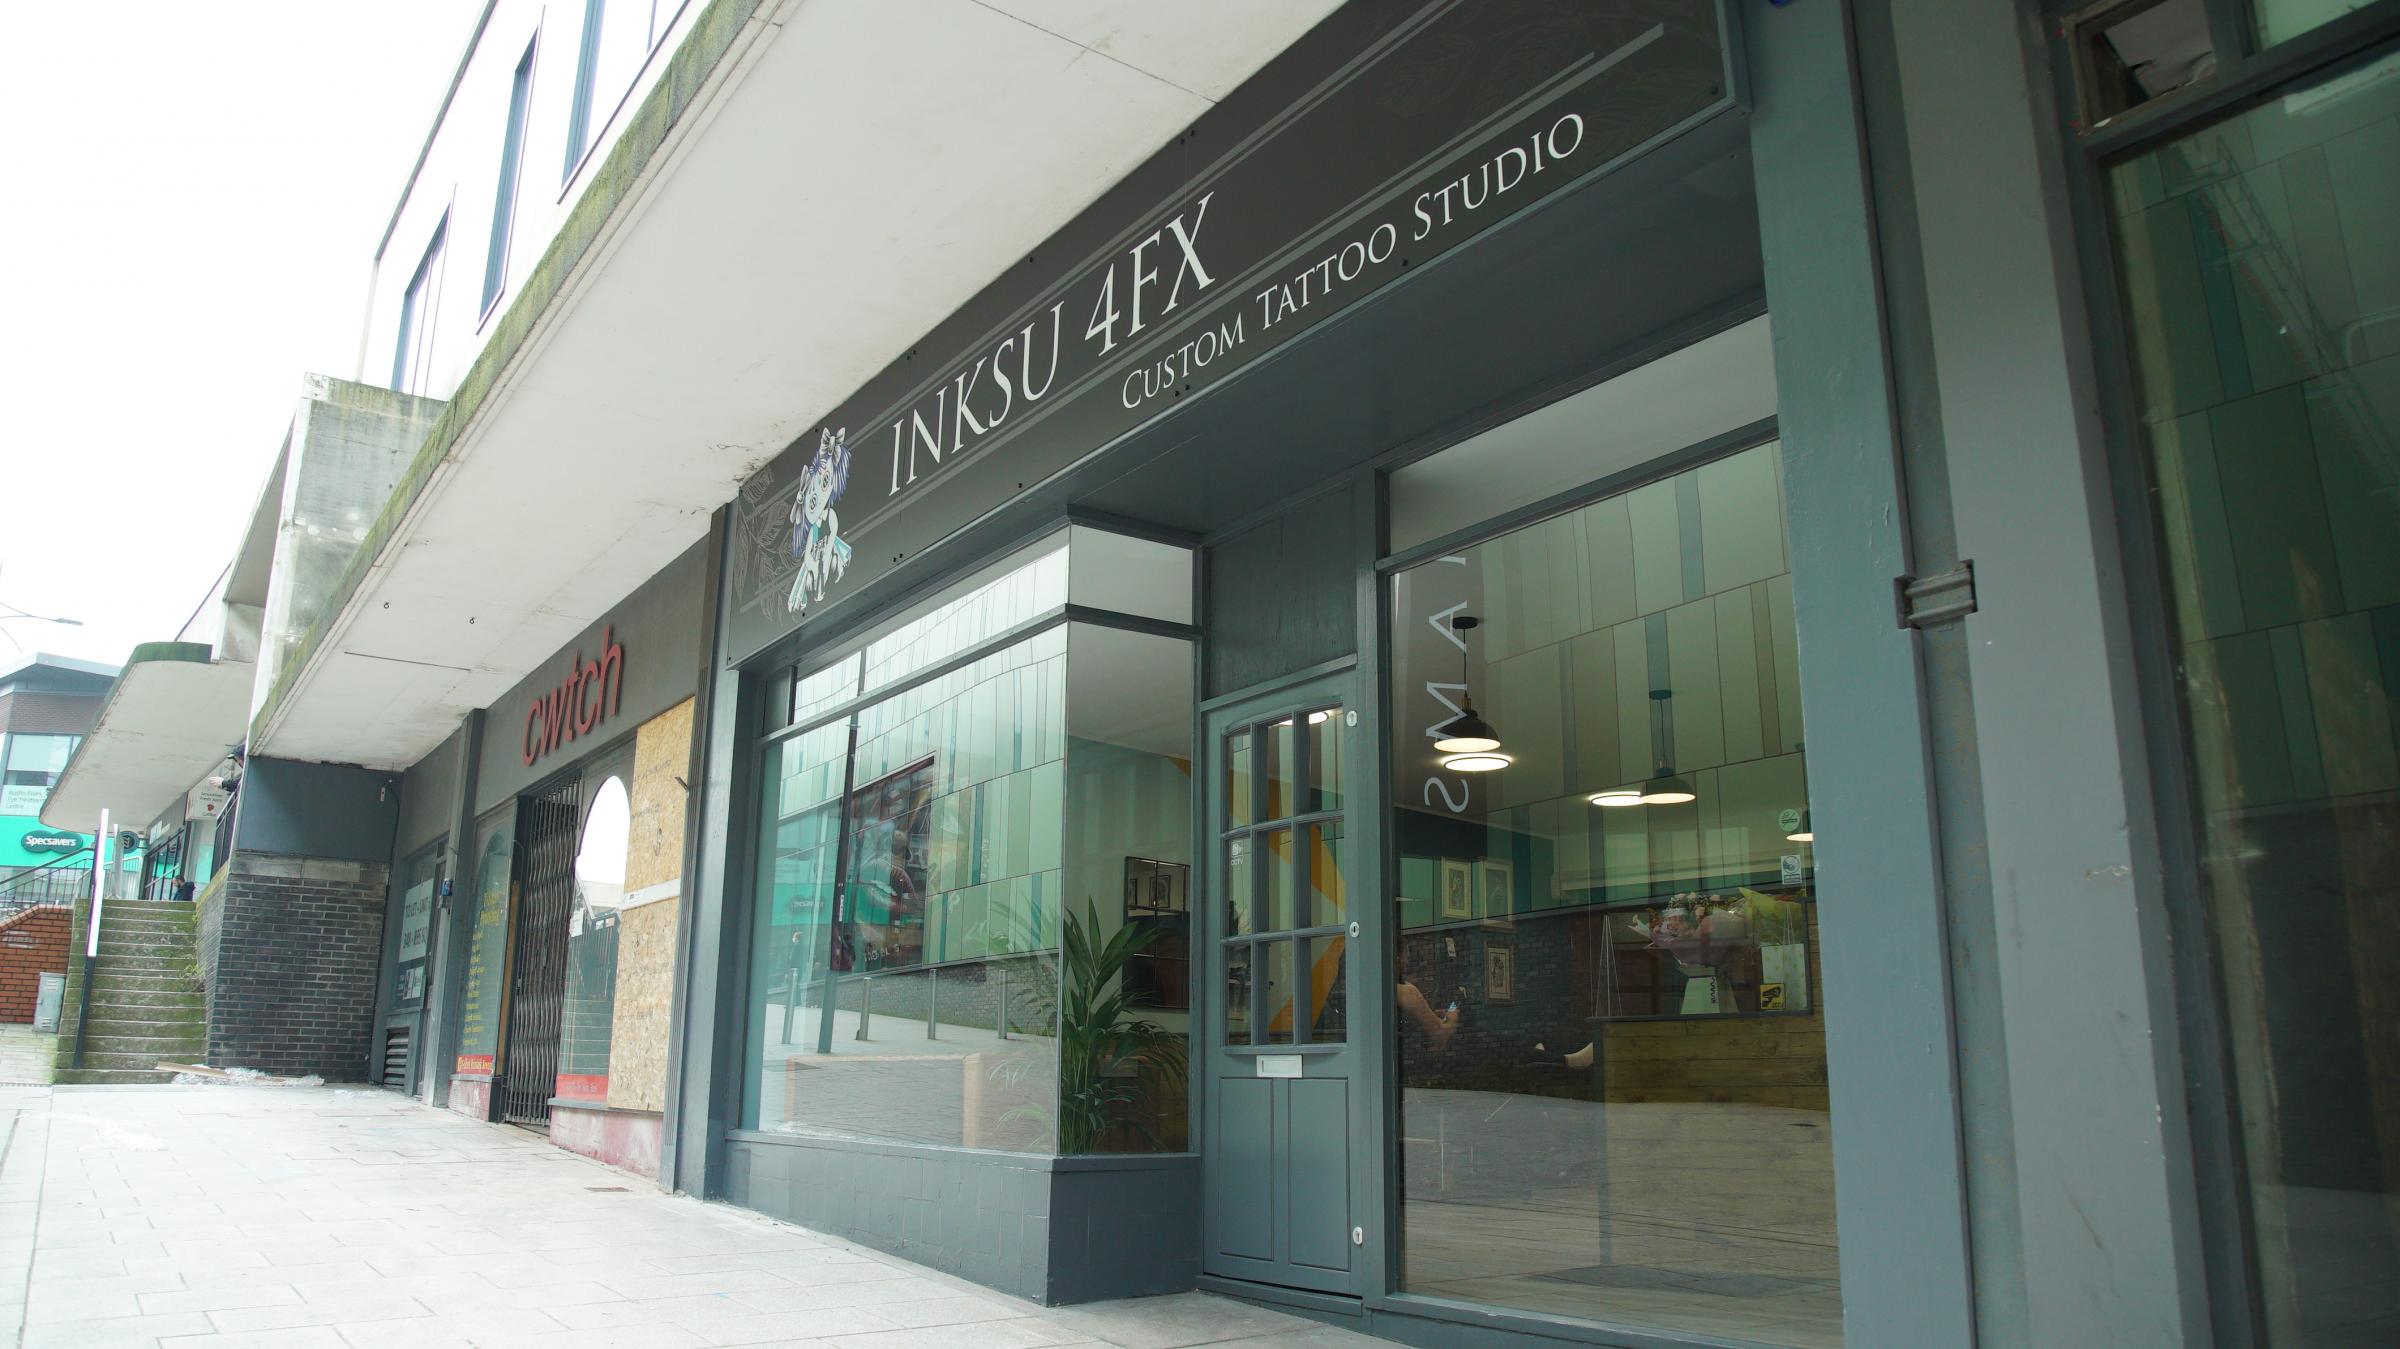 Inksu 4FX custom tattoo studio opens in Newport city centre